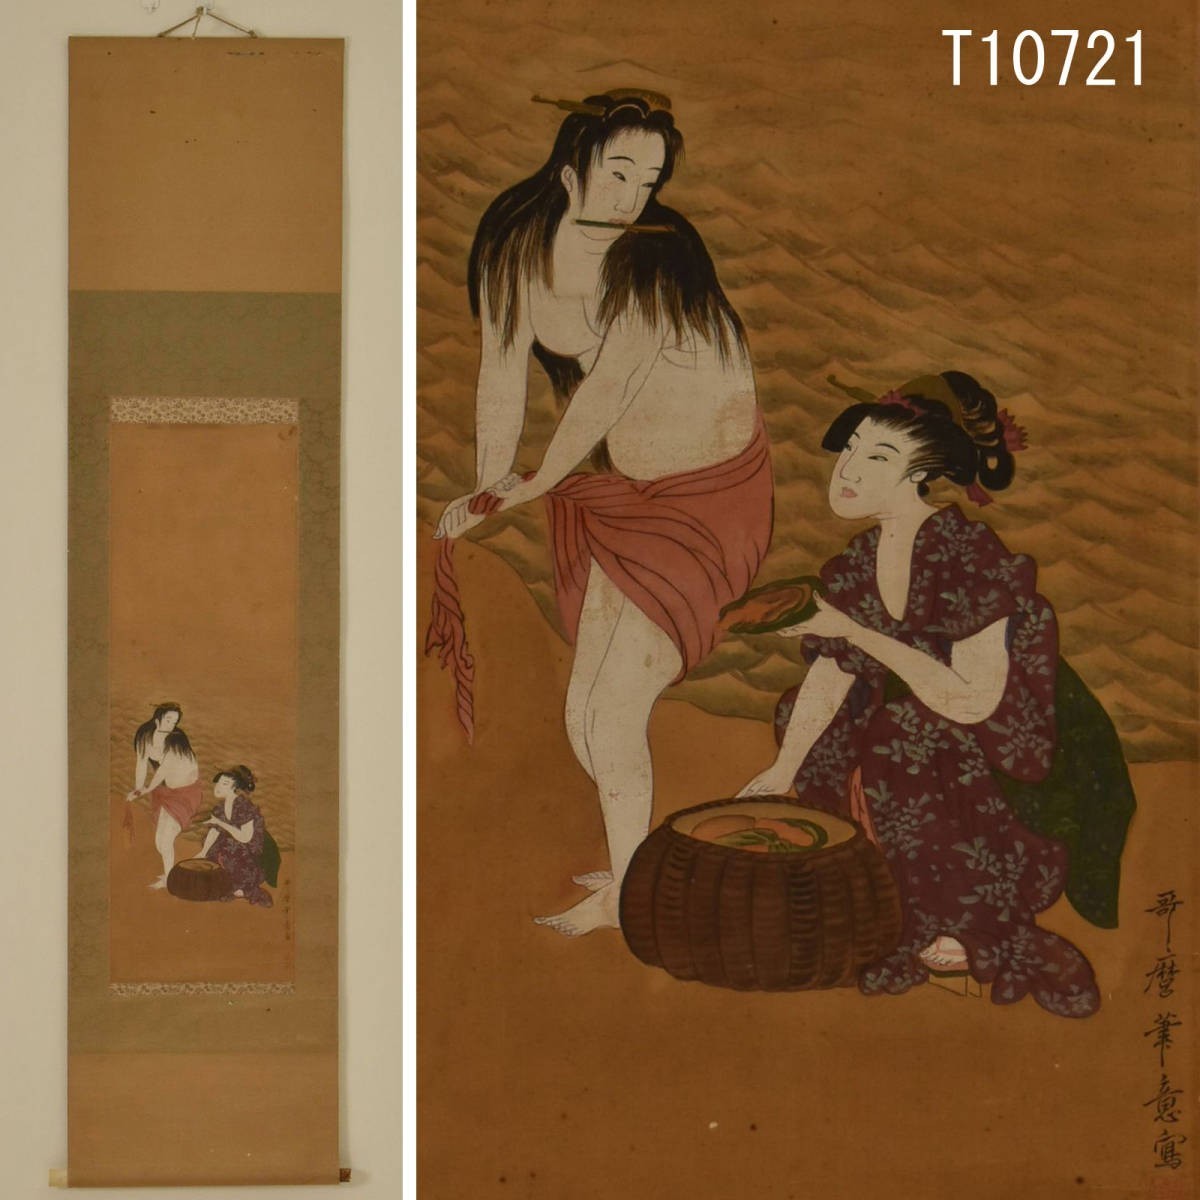 T10721 Pergamino colgante con pintura de belleza manuscrita de Utamaro: auténtico, Cuadro, pintura japonesa, persona, Bodhisattva